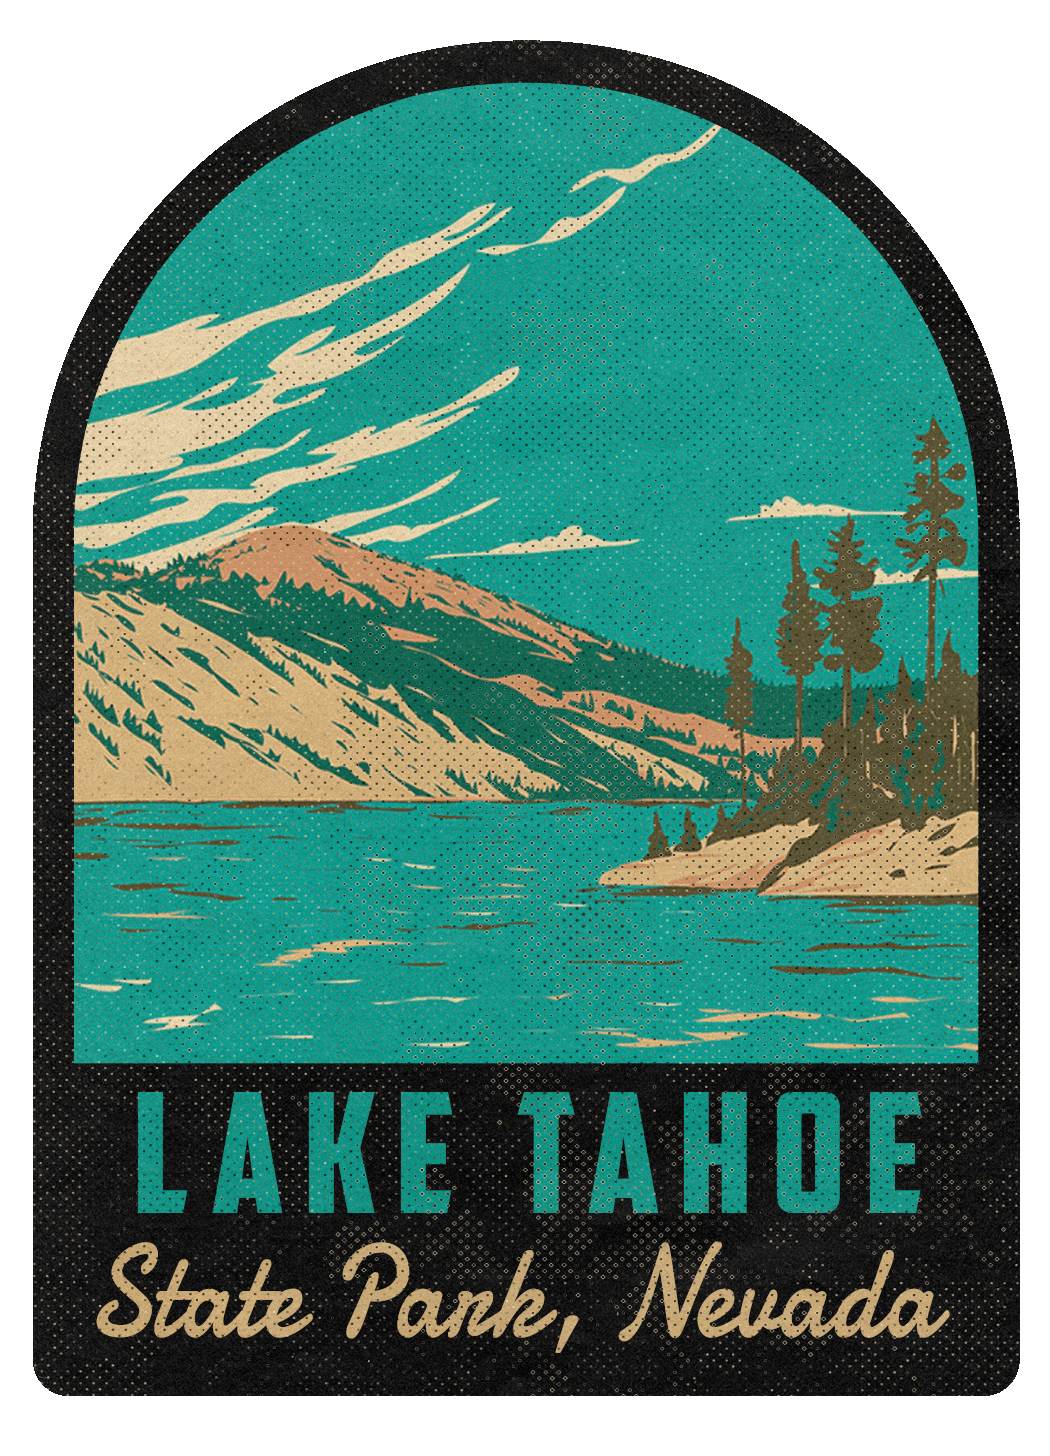 Lake Tahoe Nevada State Park Vintage Travel Air Freshener